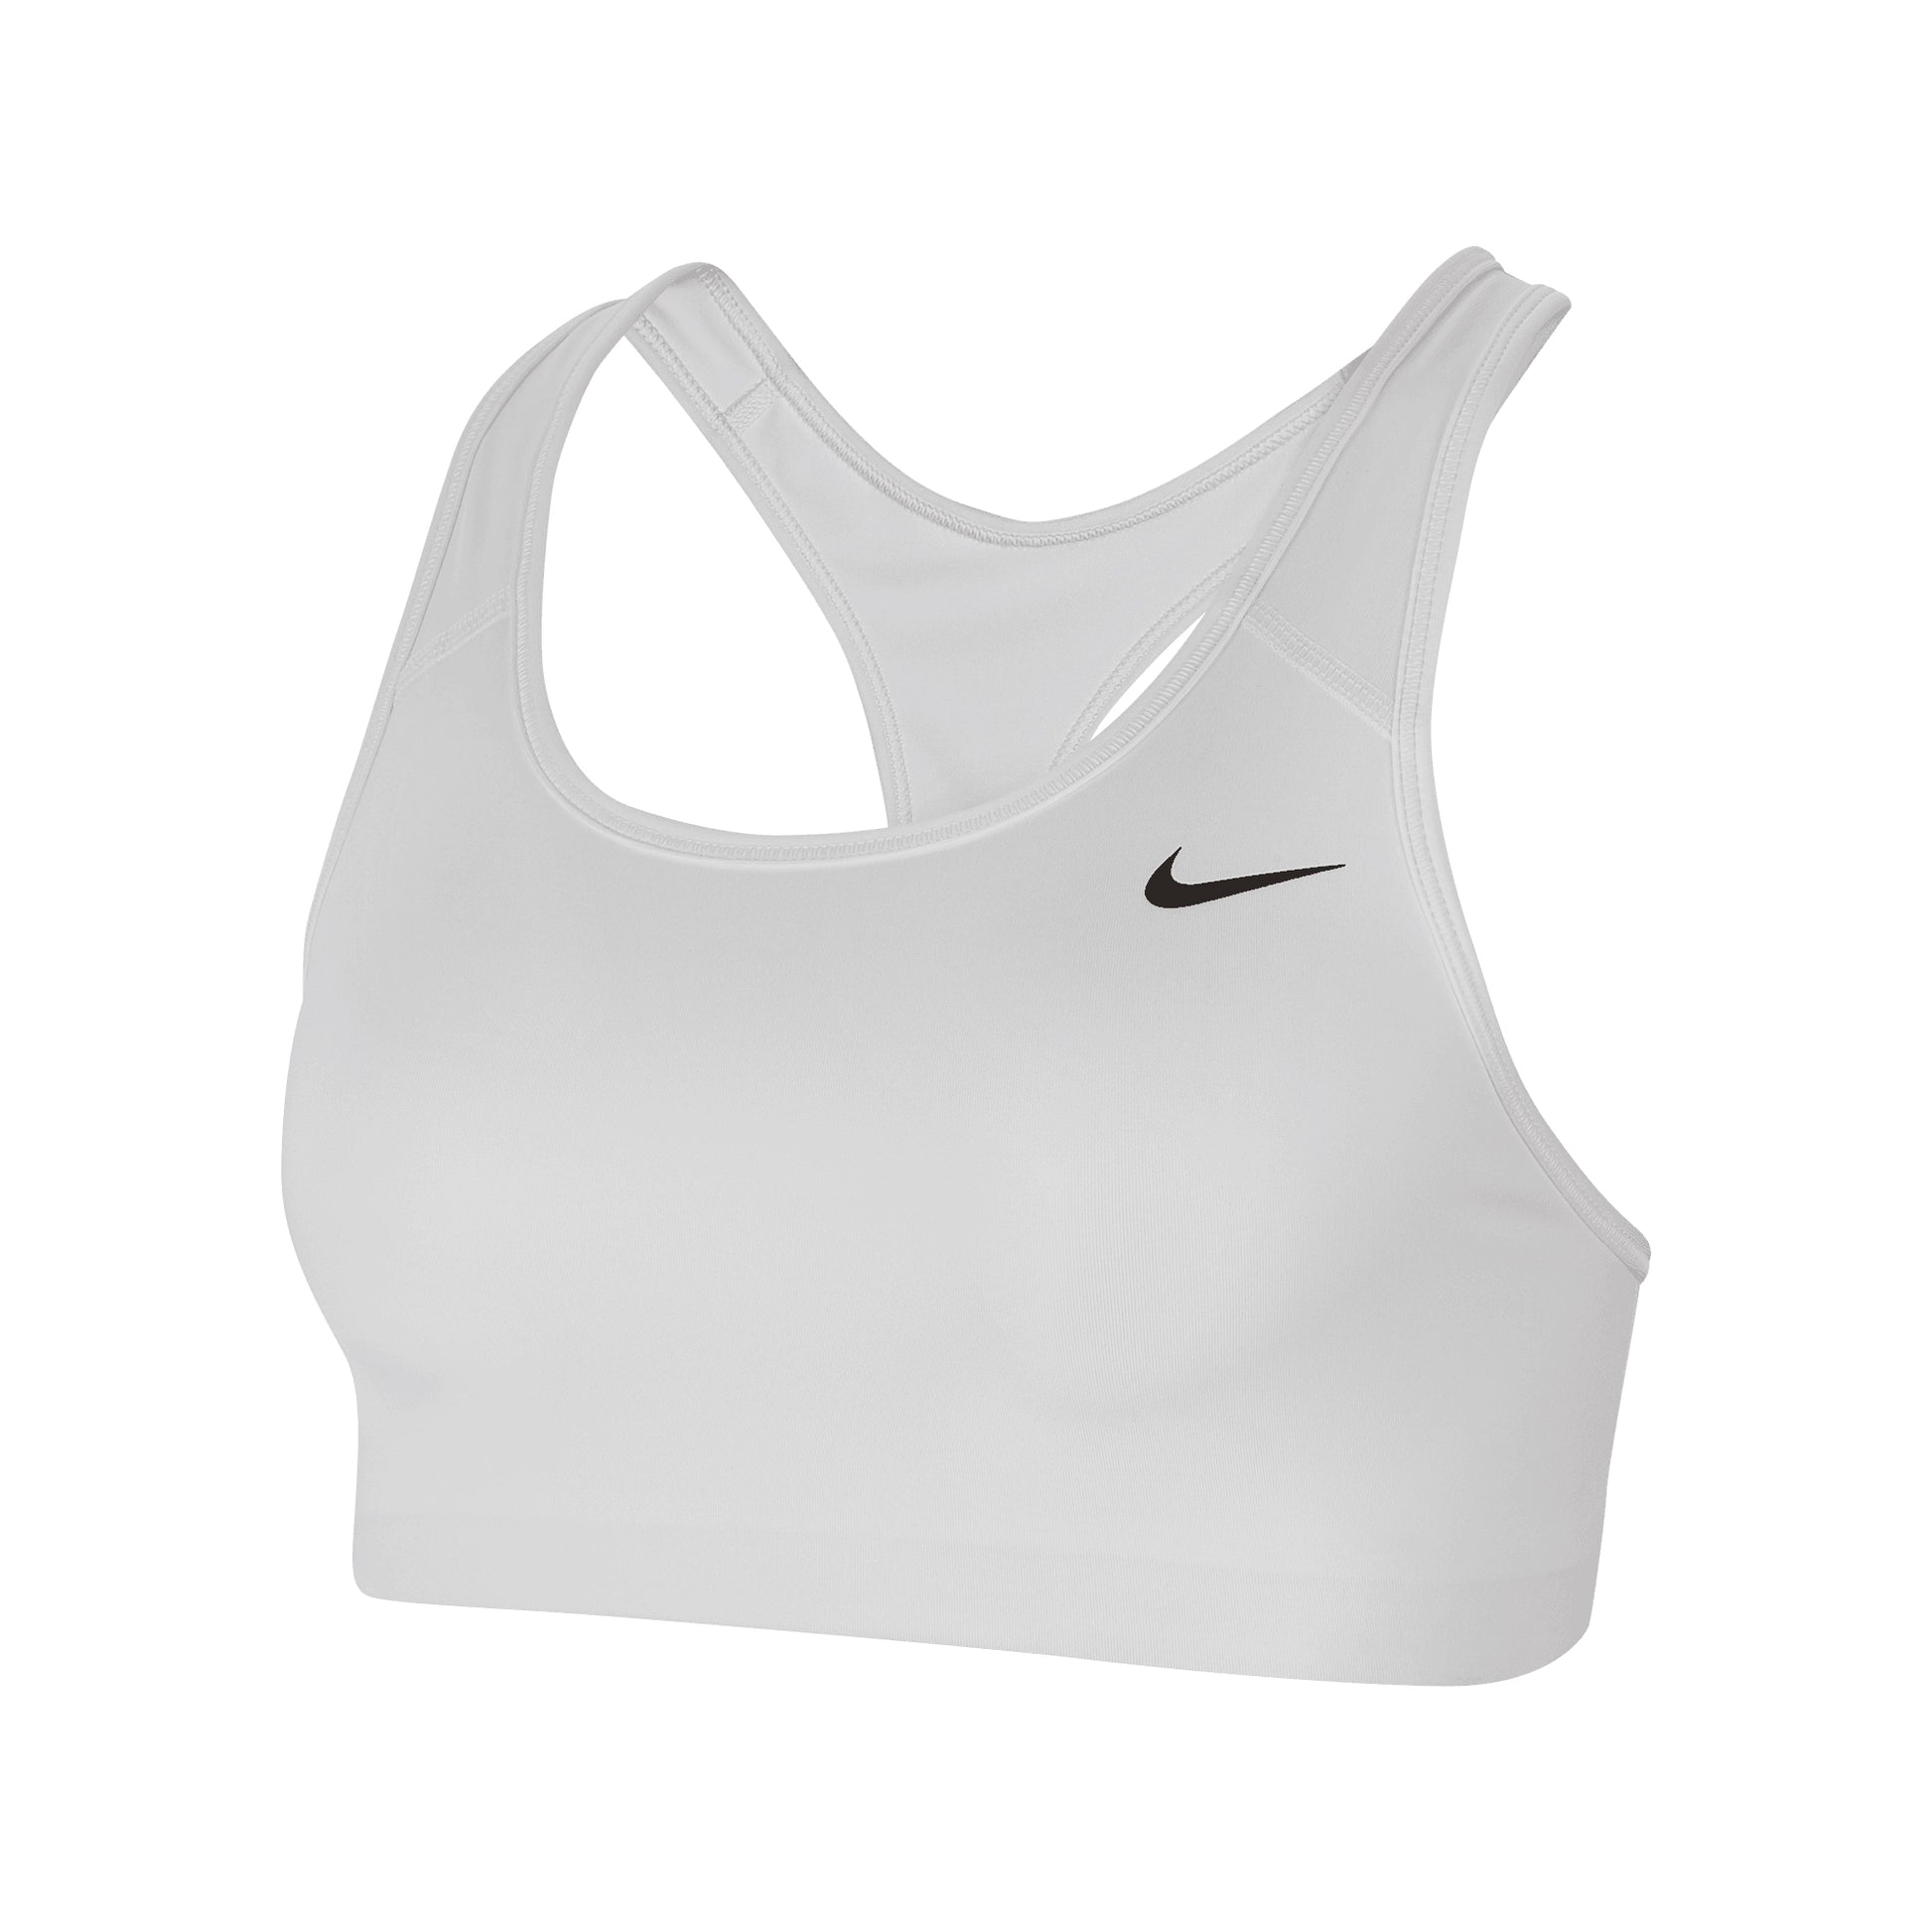 White Nike Sports Bras & Vests - High - Gym Ready - JD Sports Global